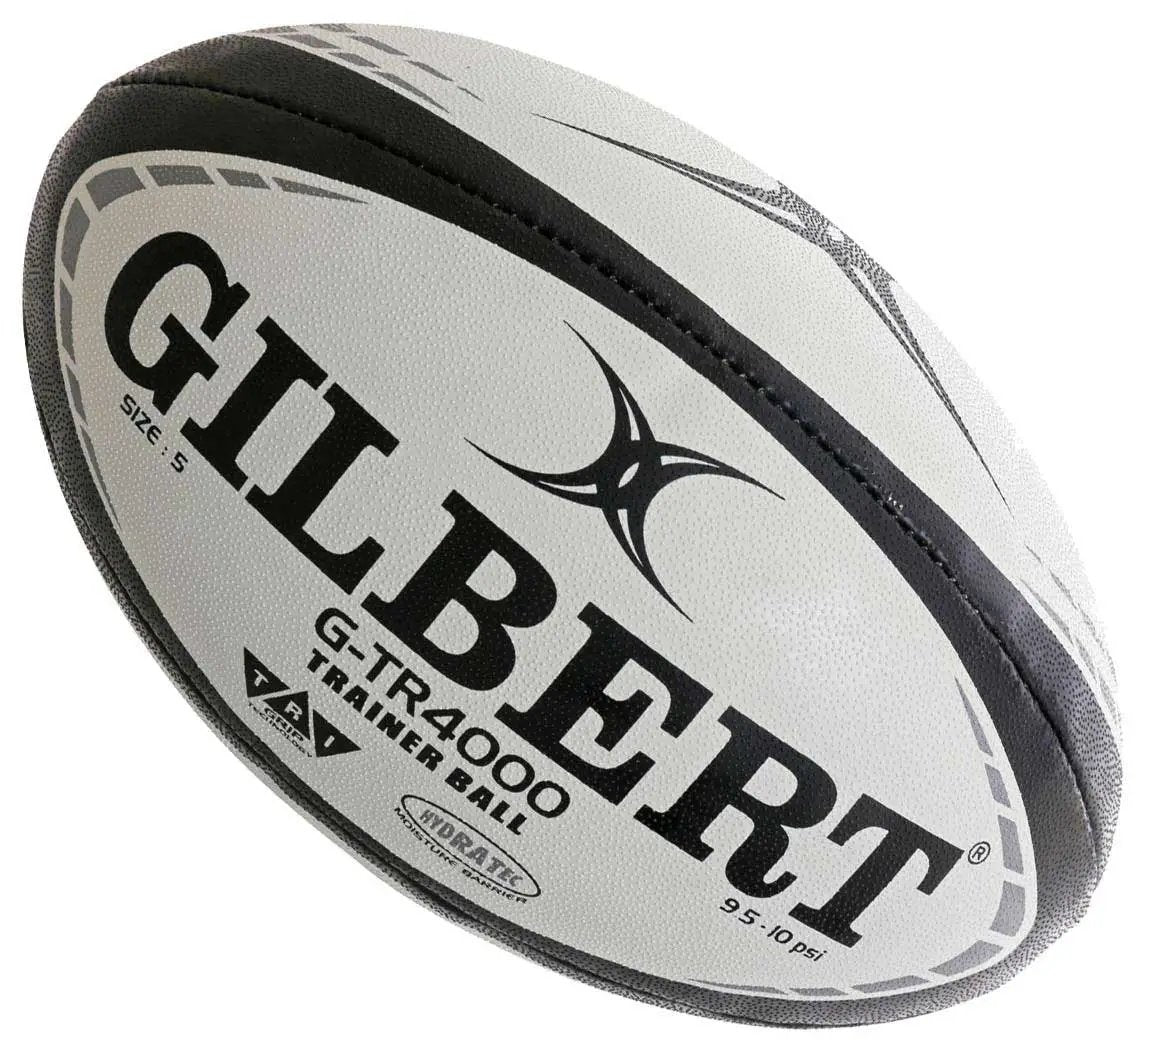 Gilbert G-TR4000 Rugby Ball Size 3 4 5 